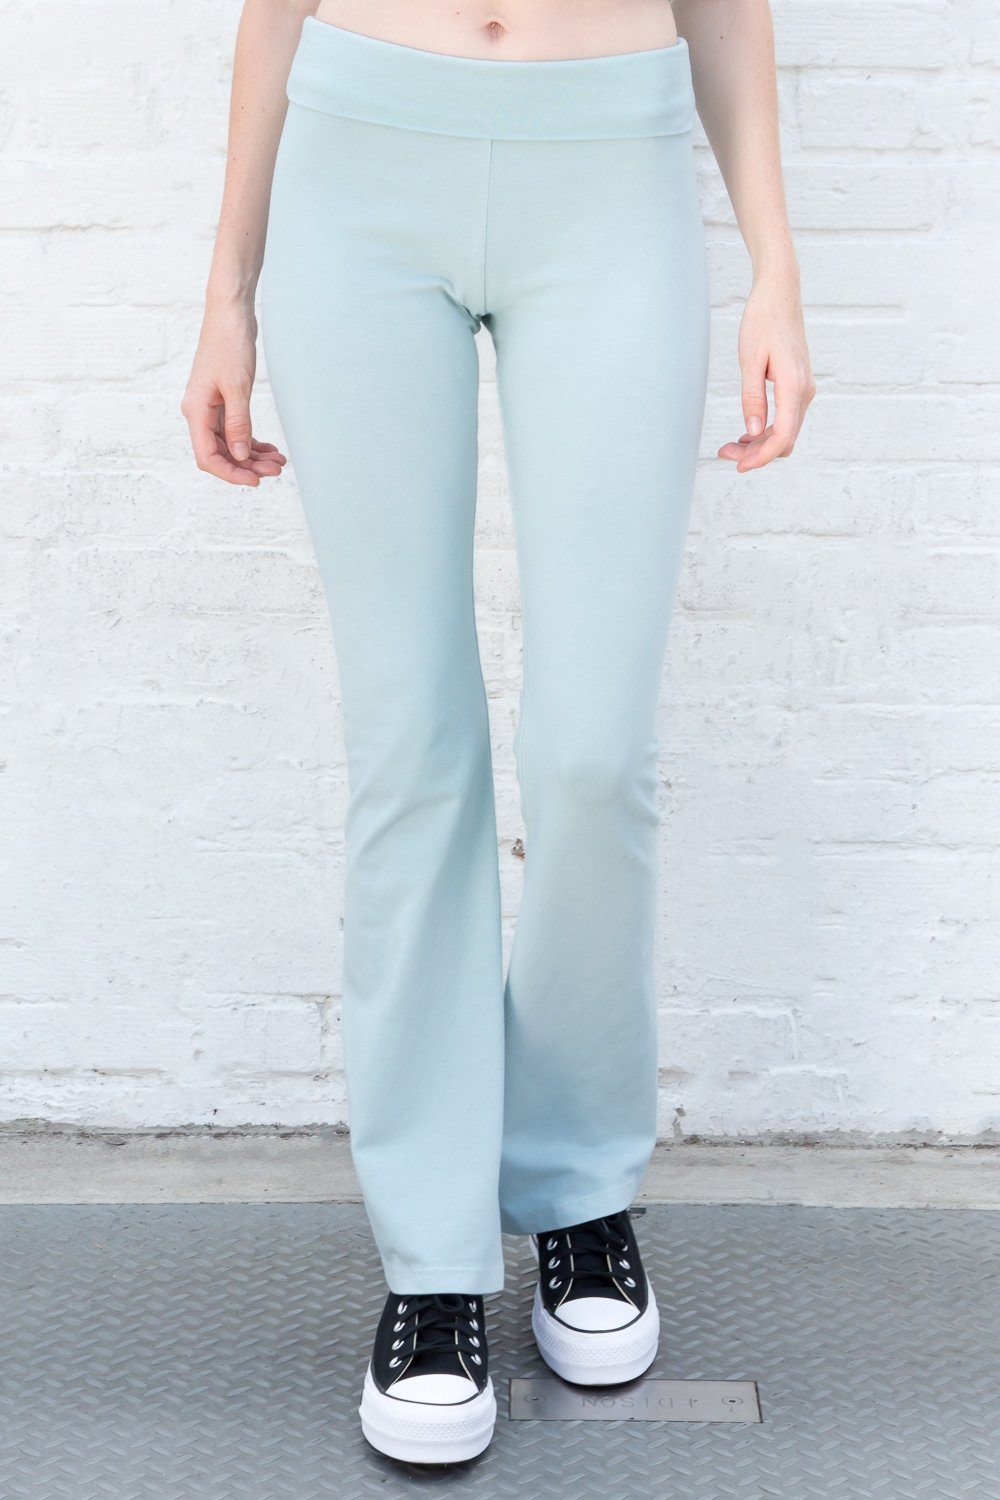 Brandy Melville Women's Priscilla Pants Yoga Pants Blue Flared